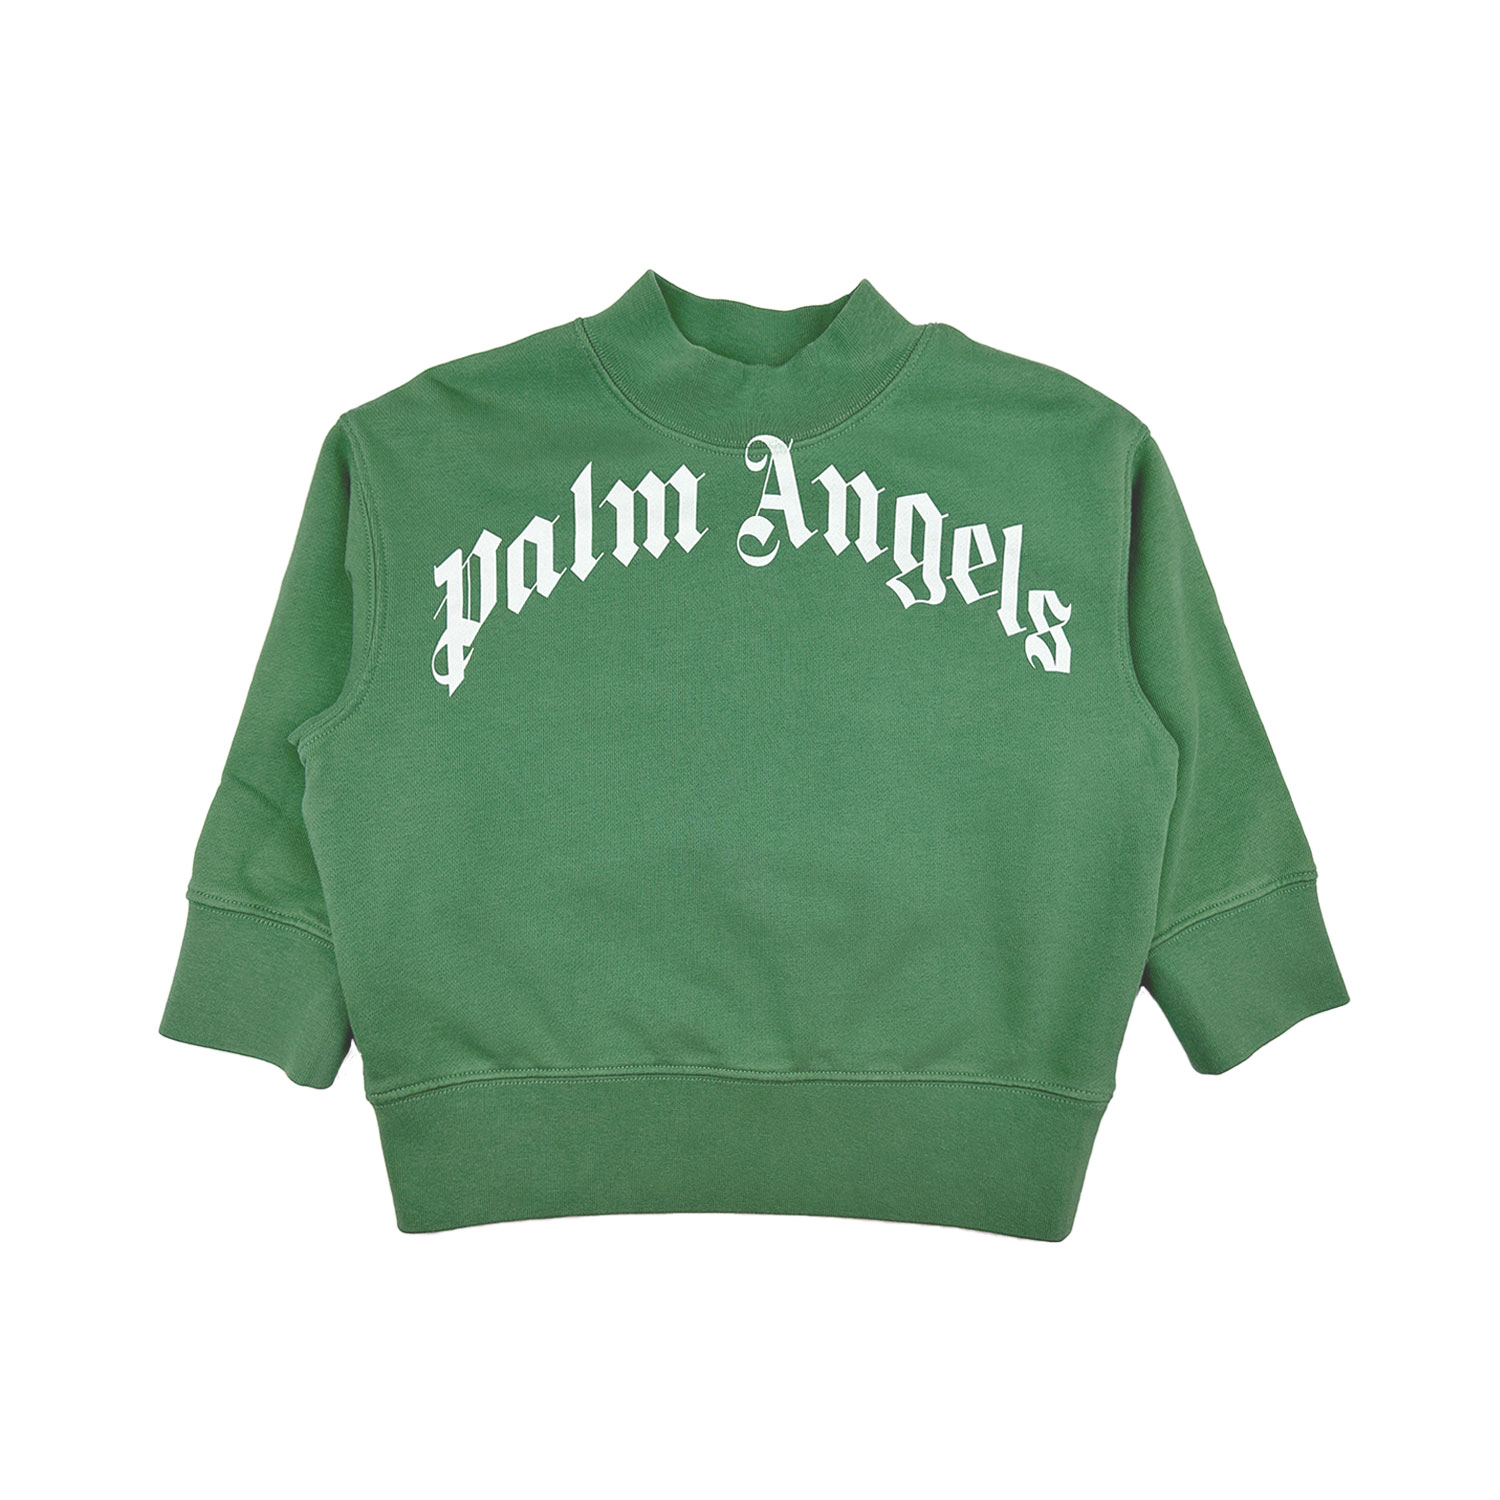 palm-groen-sweater